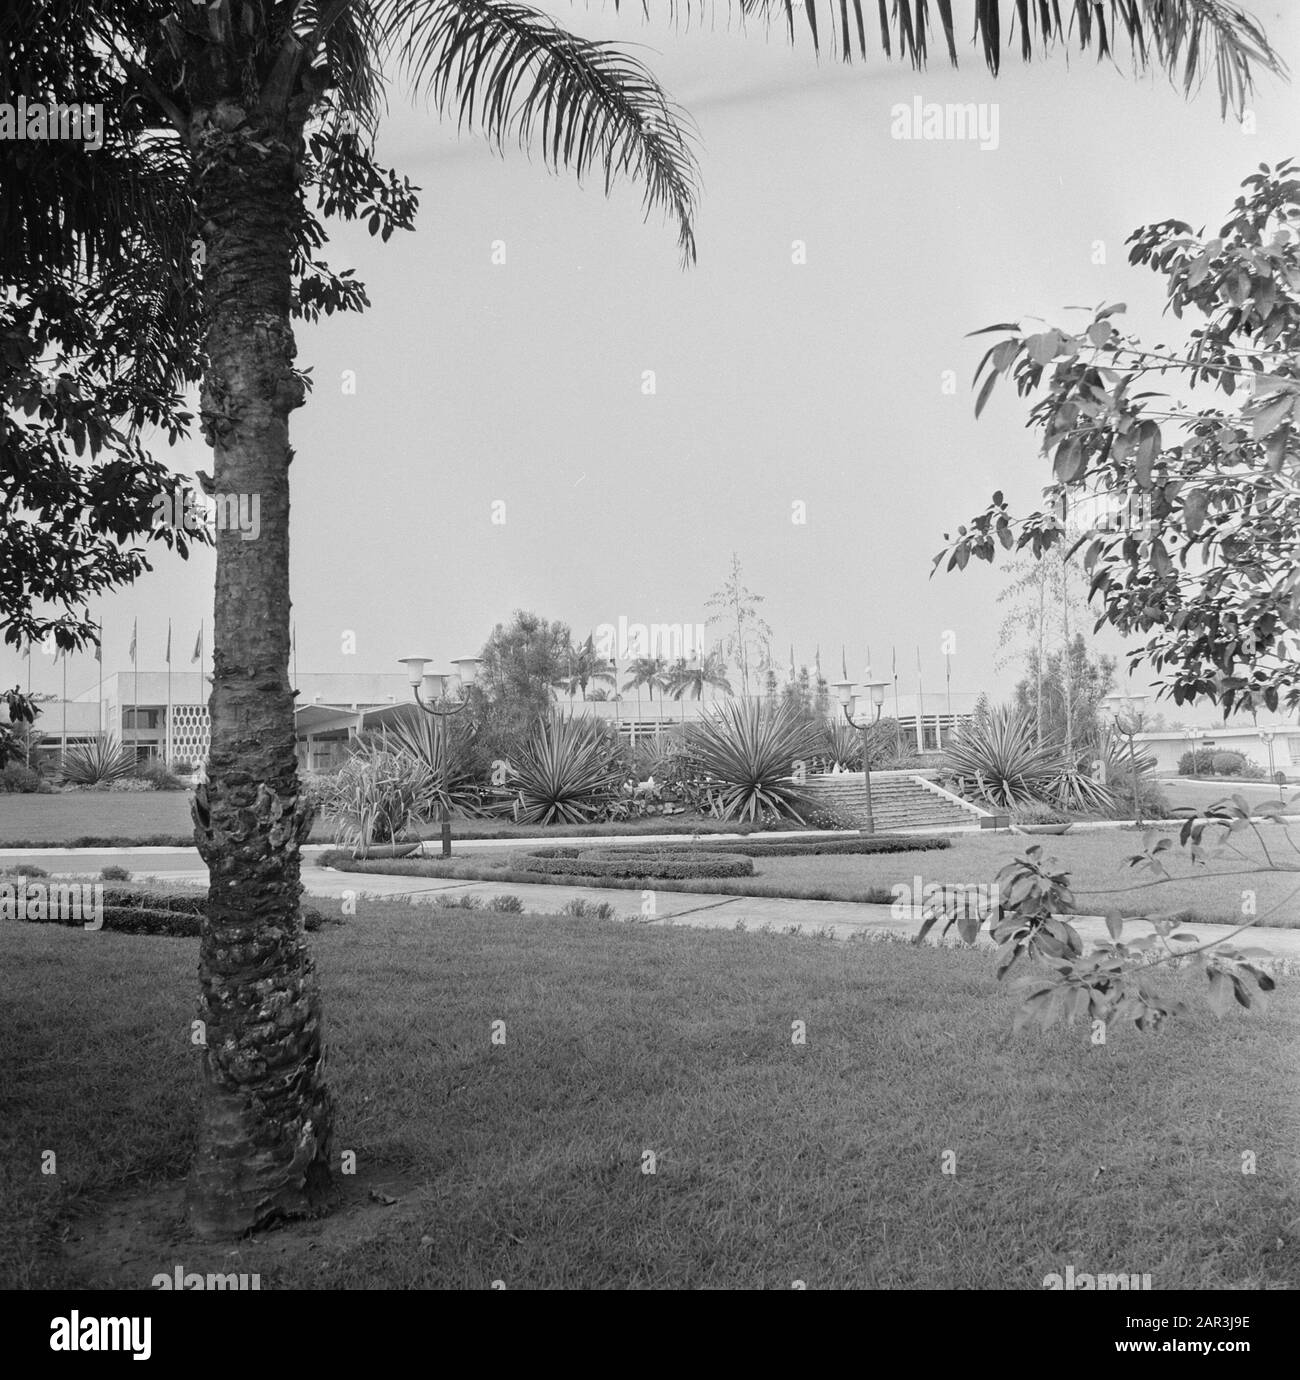 Zaire (ehemals Belgischer Kongo) Garten des Palastes von Präsident Mobutuu in Kinshasa Datum: 24. Oktober 1973 Ort: Kongo, Kinshasa, Zaire Schlüsselwörter: Paläste, Gärten Stockfoto